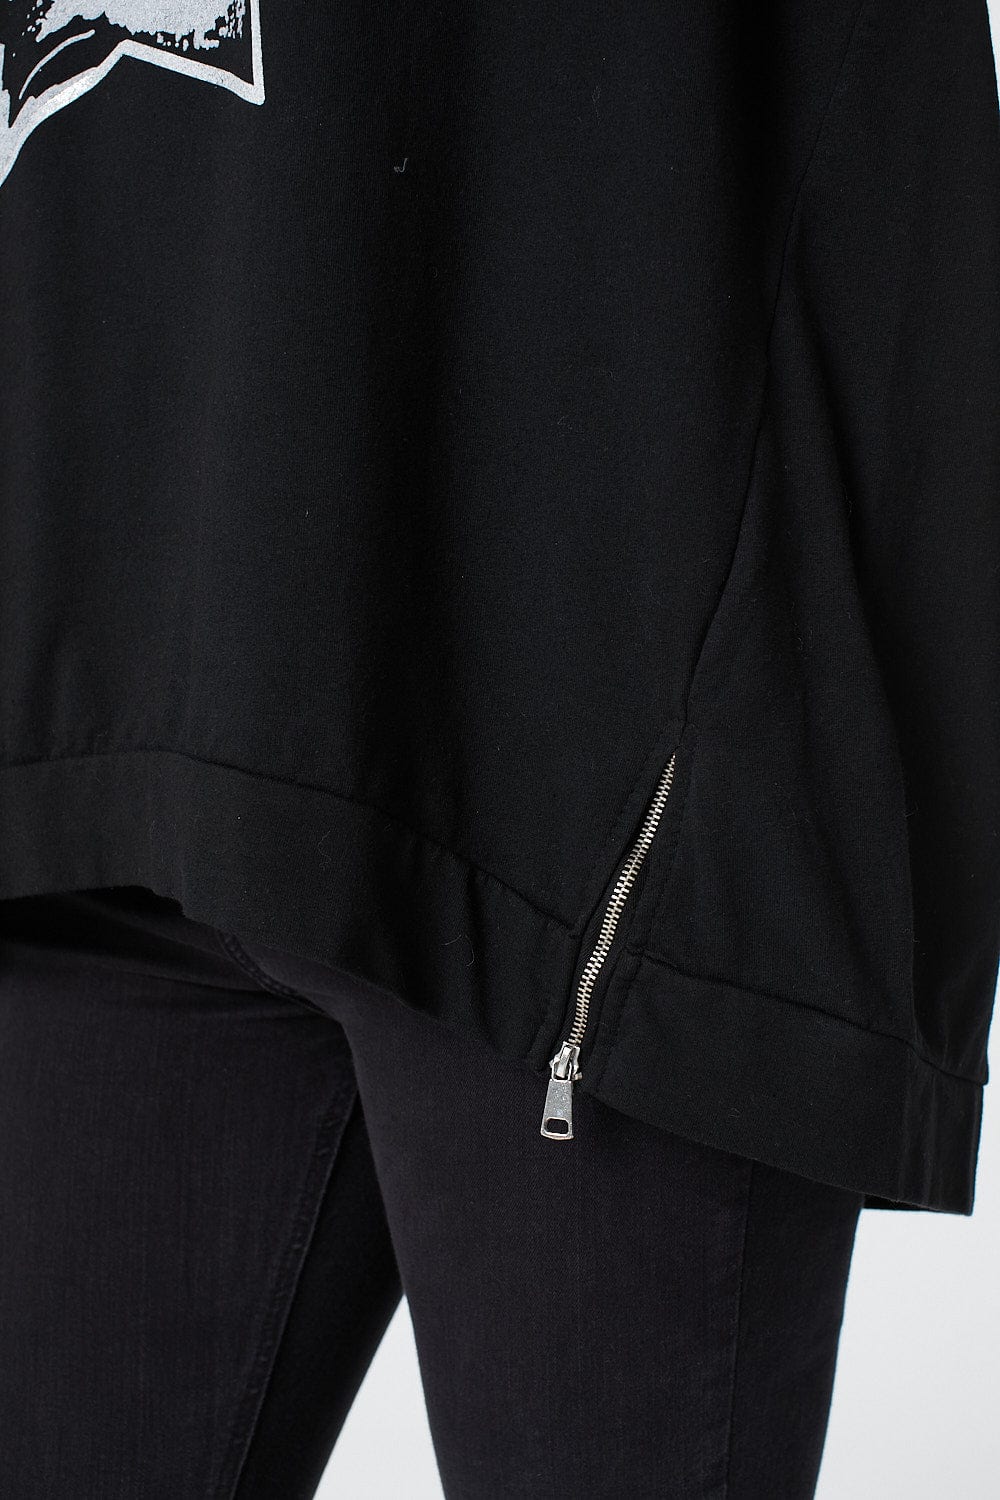 Black | Star Print Long Sleeve Sweatshirt